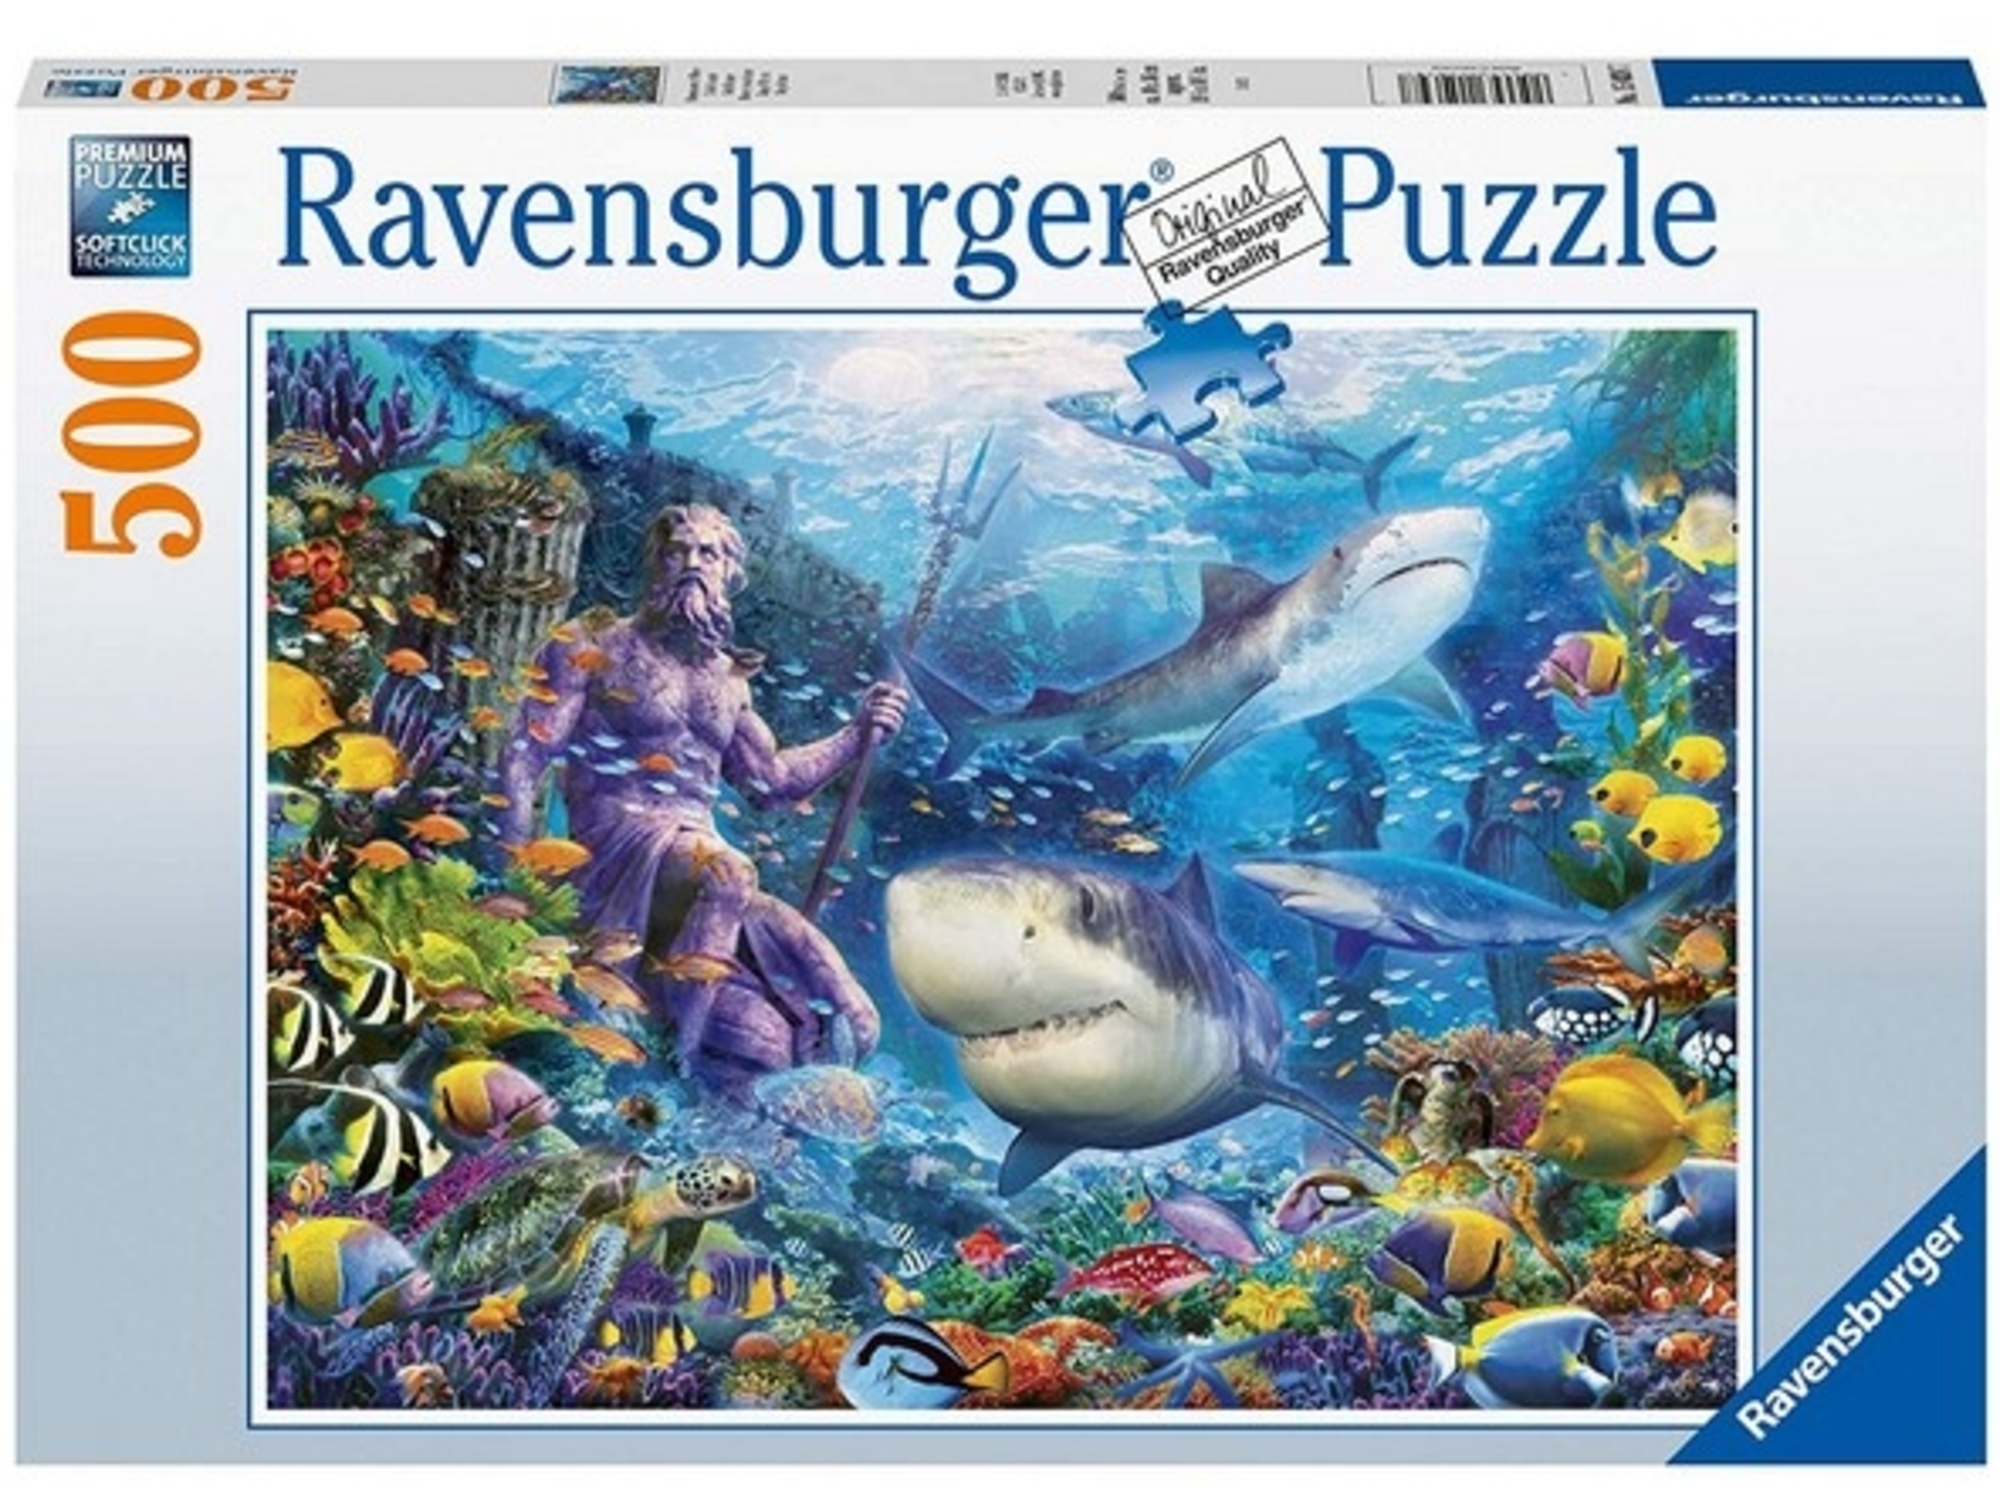 Ravensburger puzzle (slagalice) - Bog mora